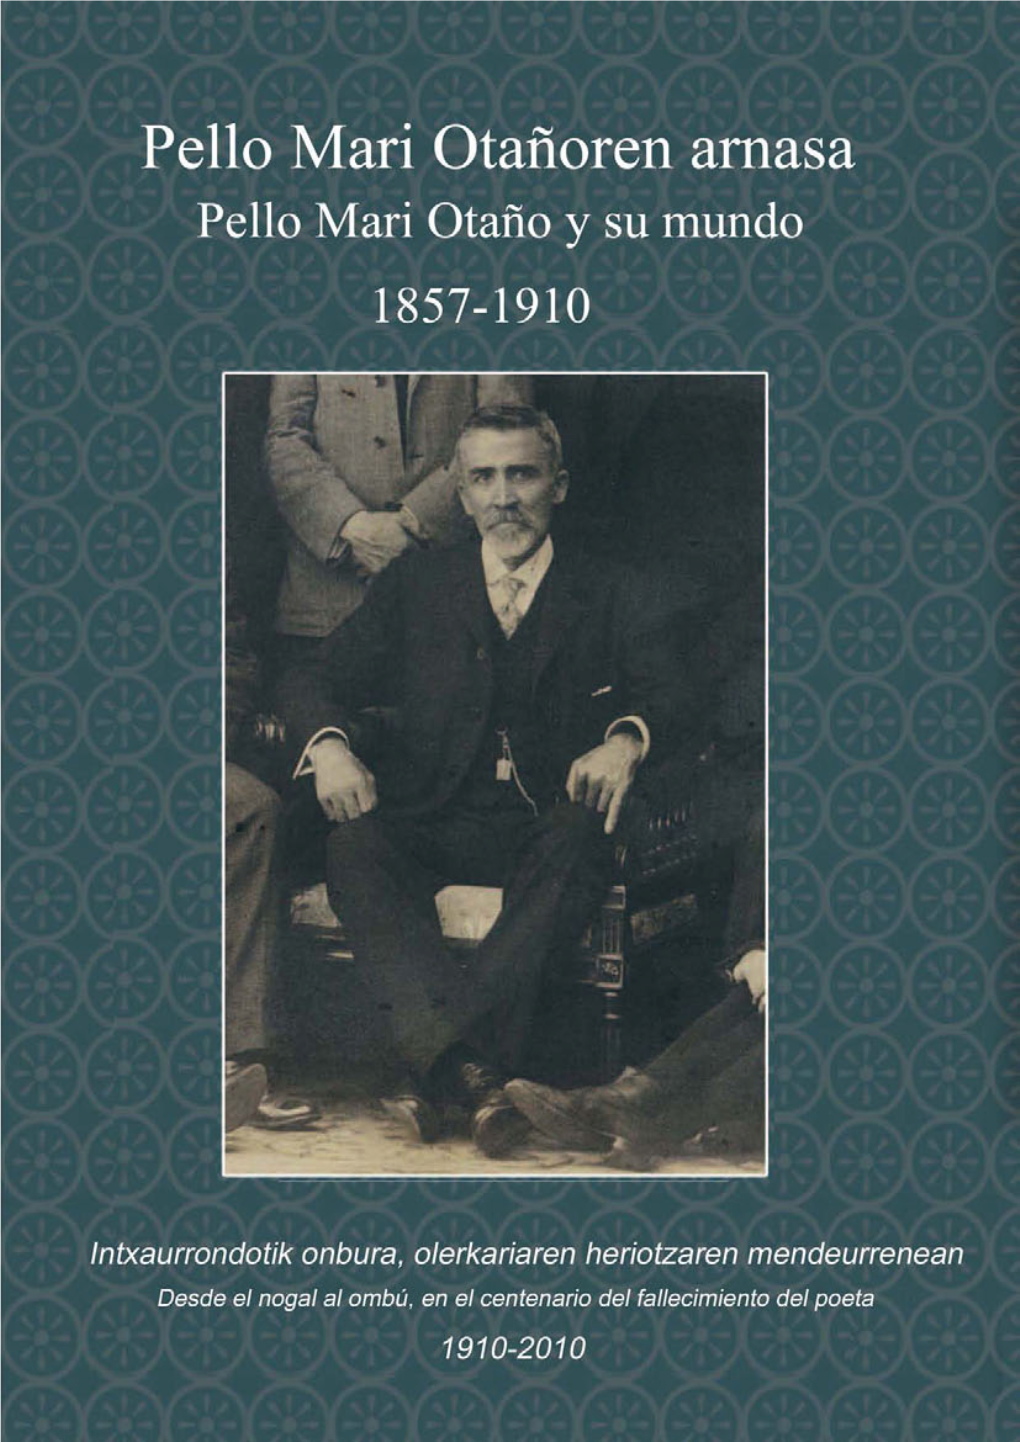 Pello Mari Otañoren Arnasa